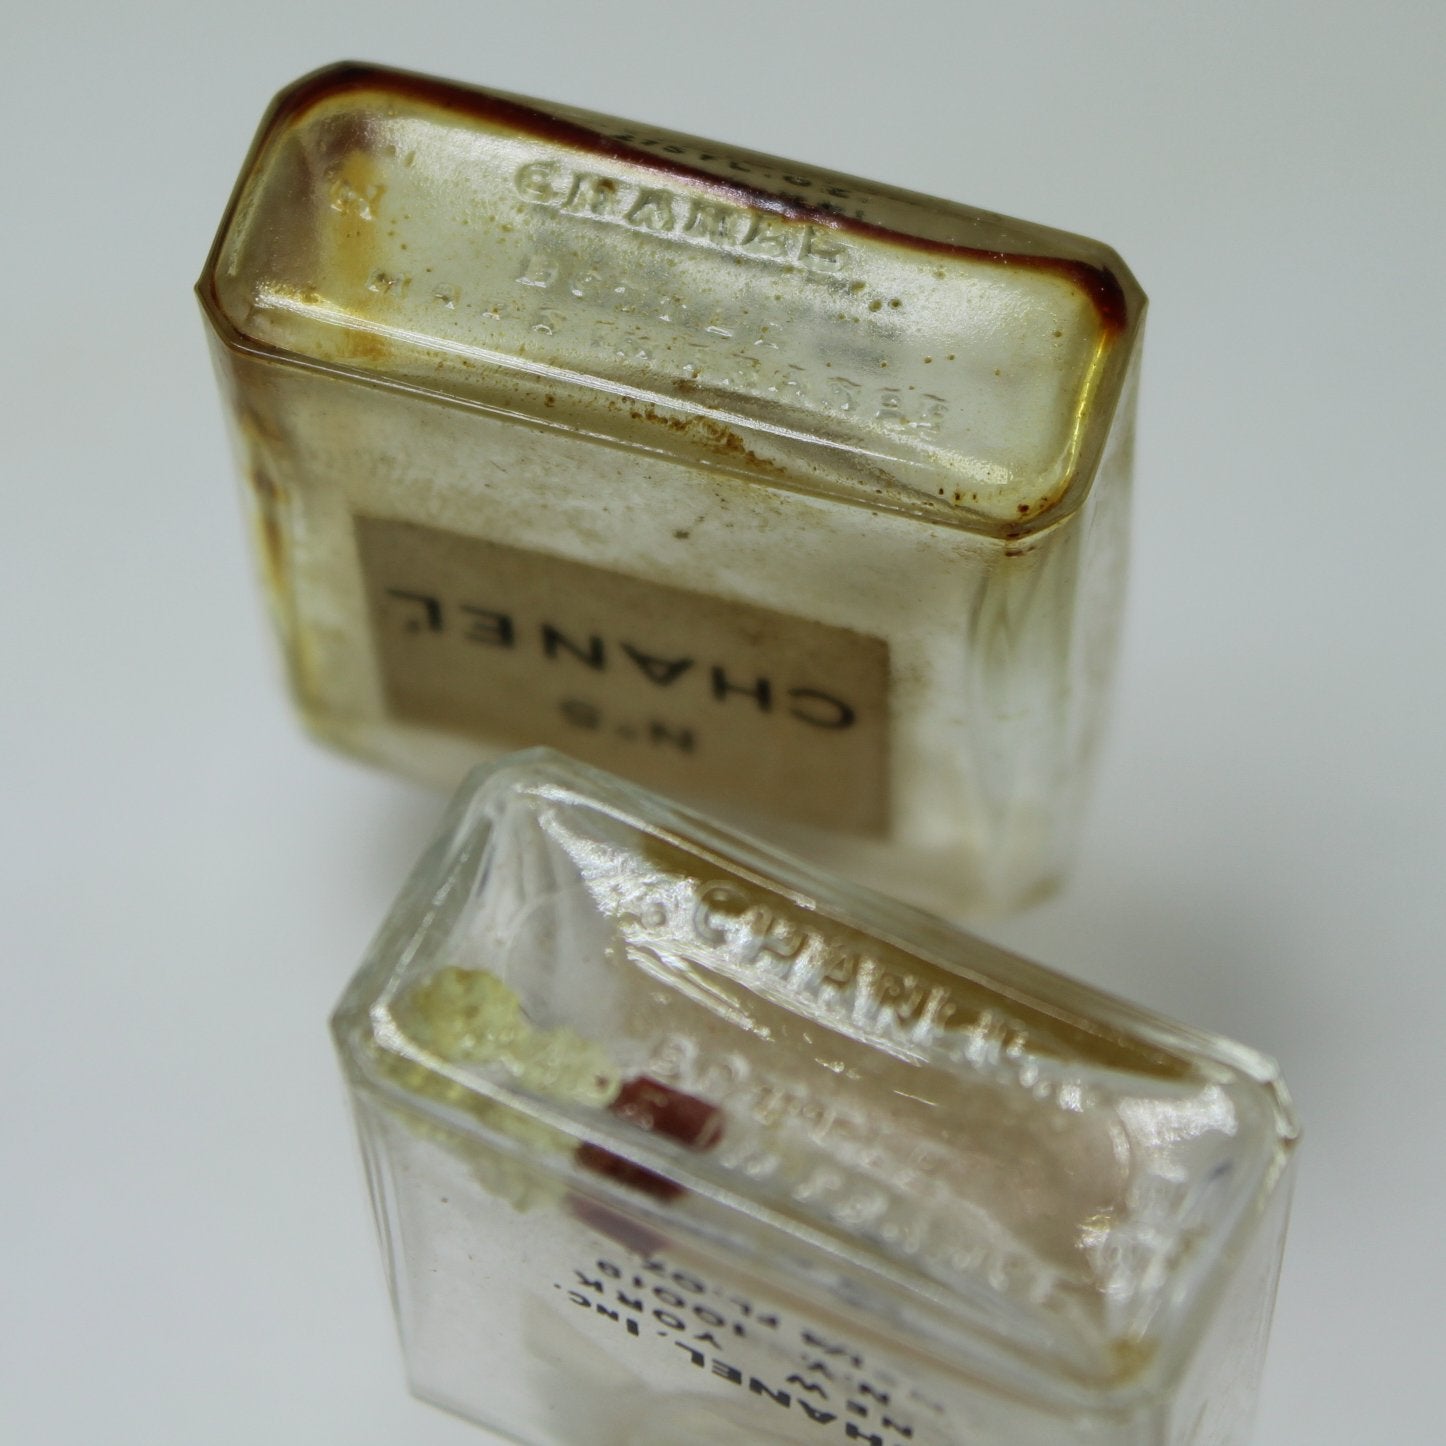 Chanel No. 5 Perfume Bottles Miniatures .275 Mid Century 1/4 oz 1960s